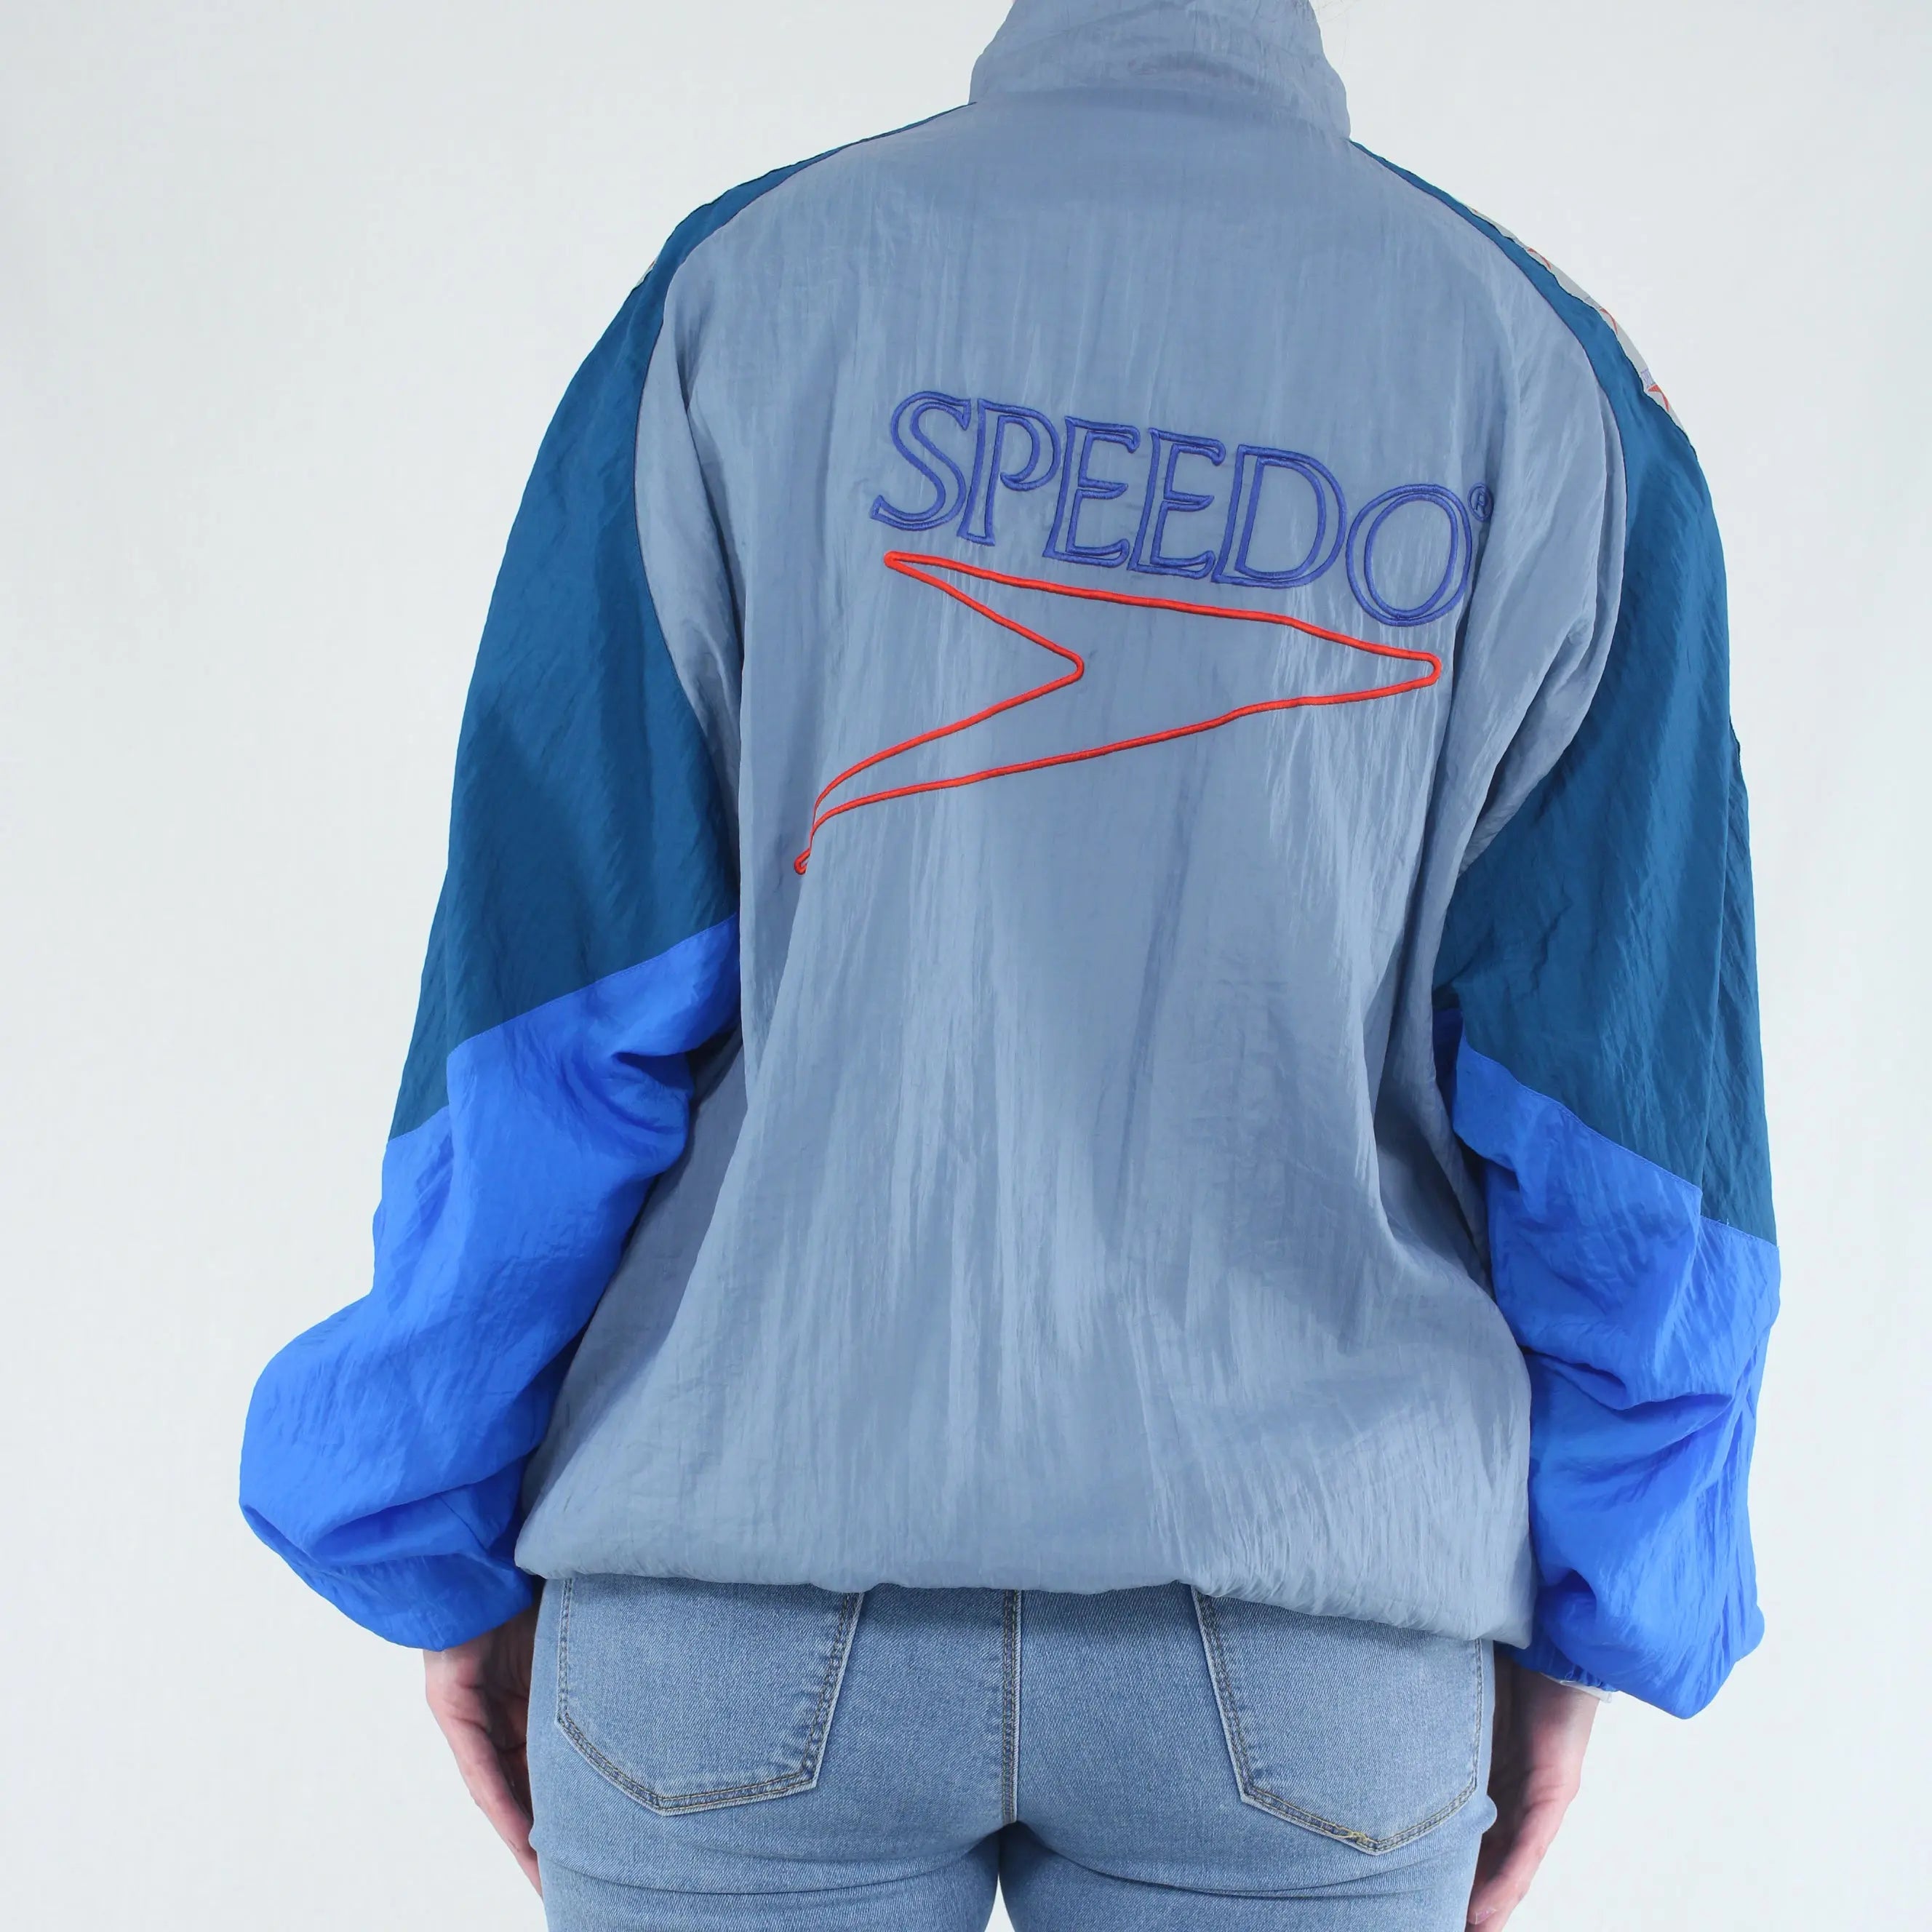 Speedo - 80s/90s Windbreaker by Speedo- ThriftTale.com - Vintage and second handclothing